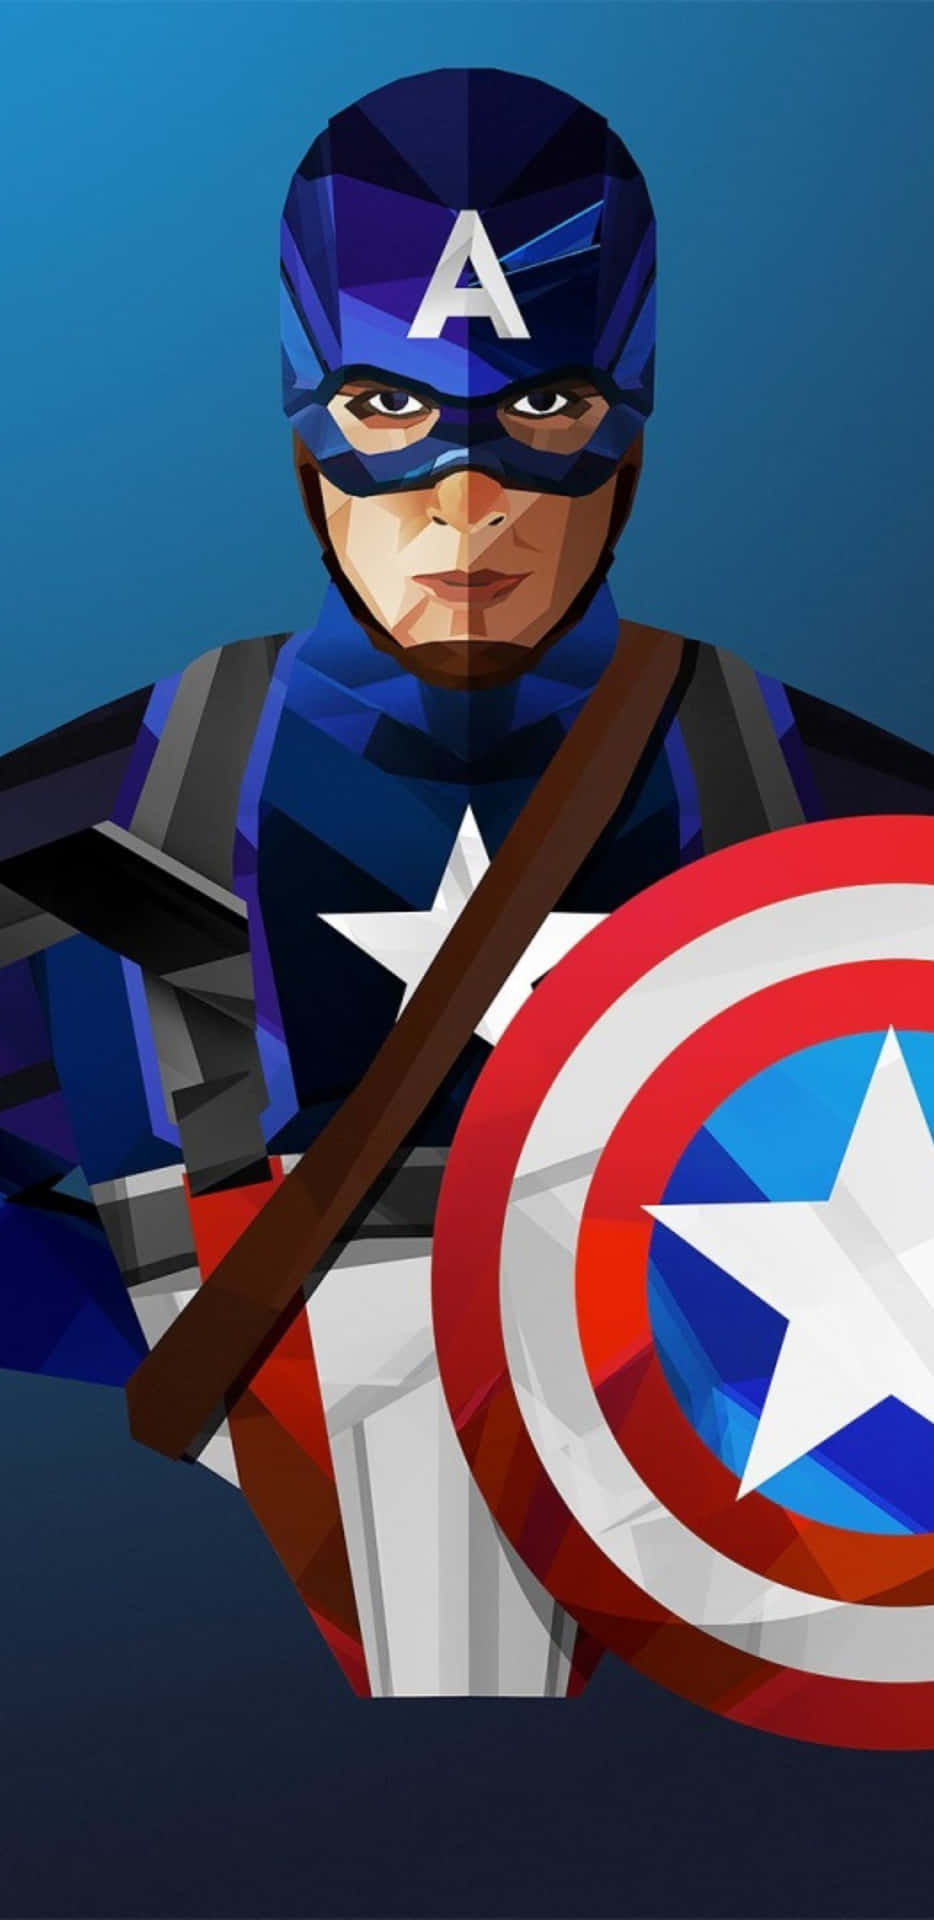 Fondode Pantalla Del Pixel 3xl De Capitán América Con Arte De Estilo Low Poly.